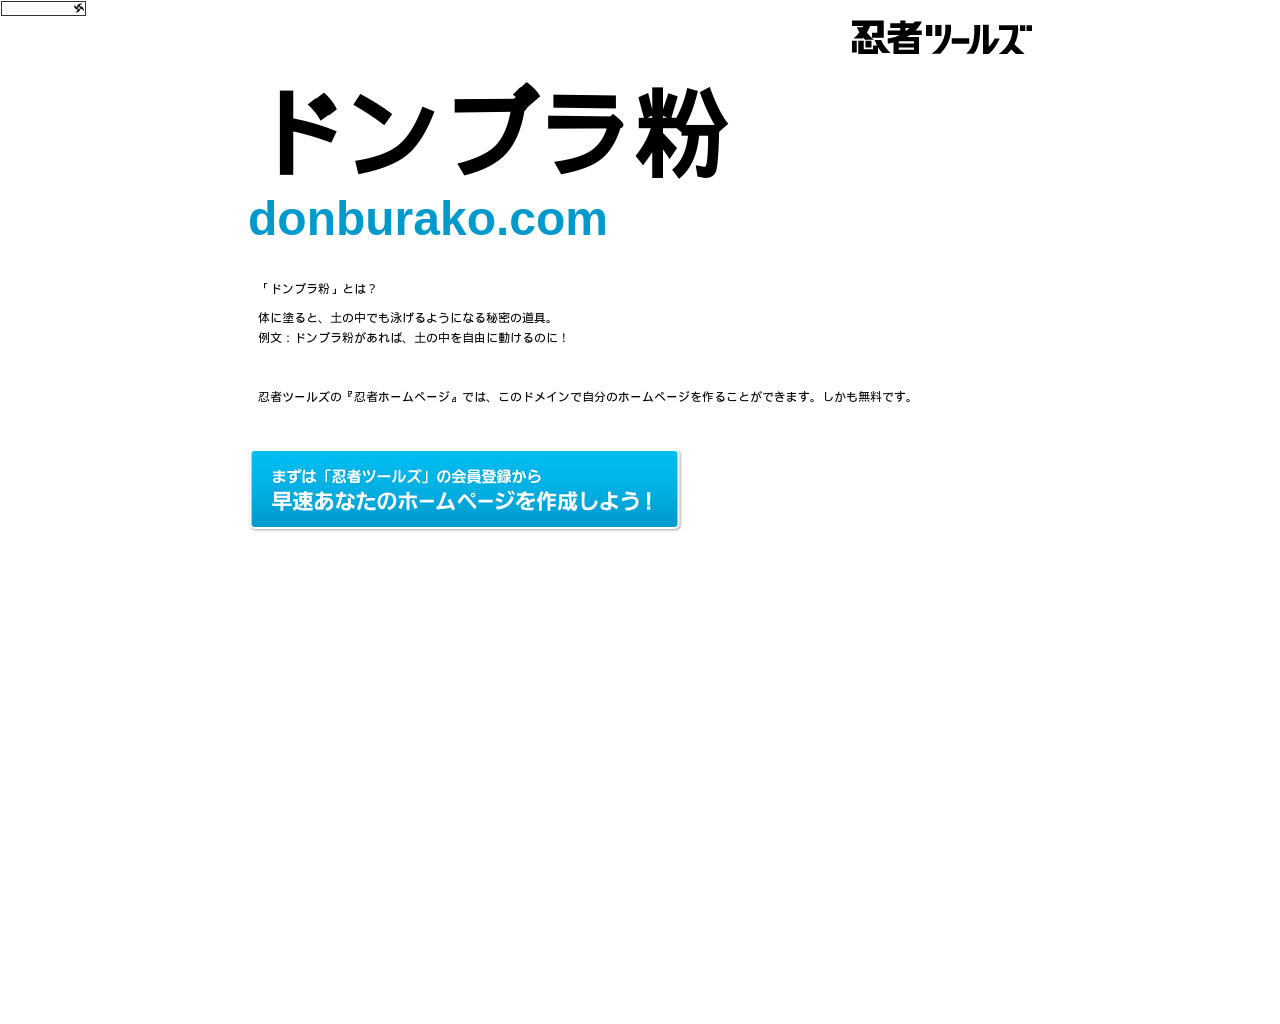 donburako.com